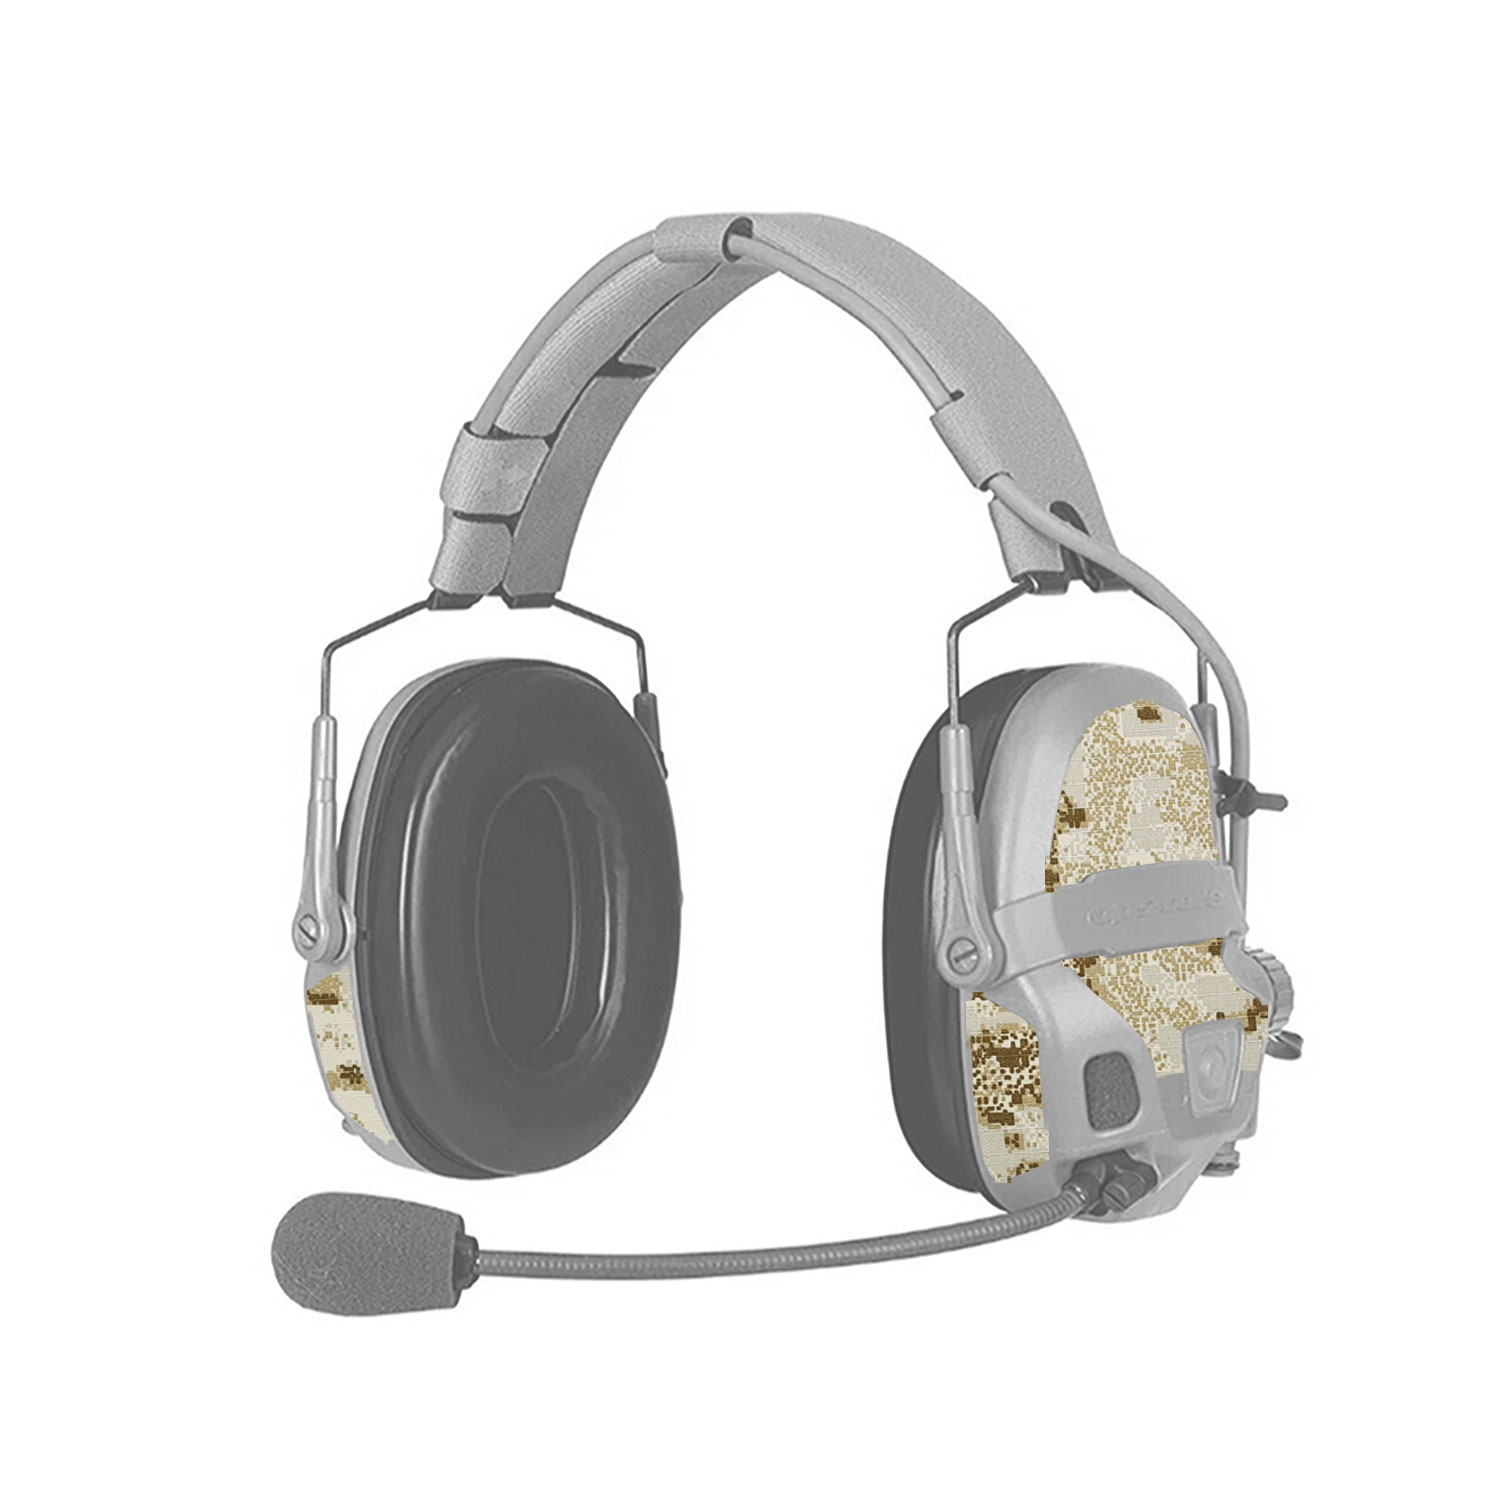 amp-headset-pencott-sandstorm-2